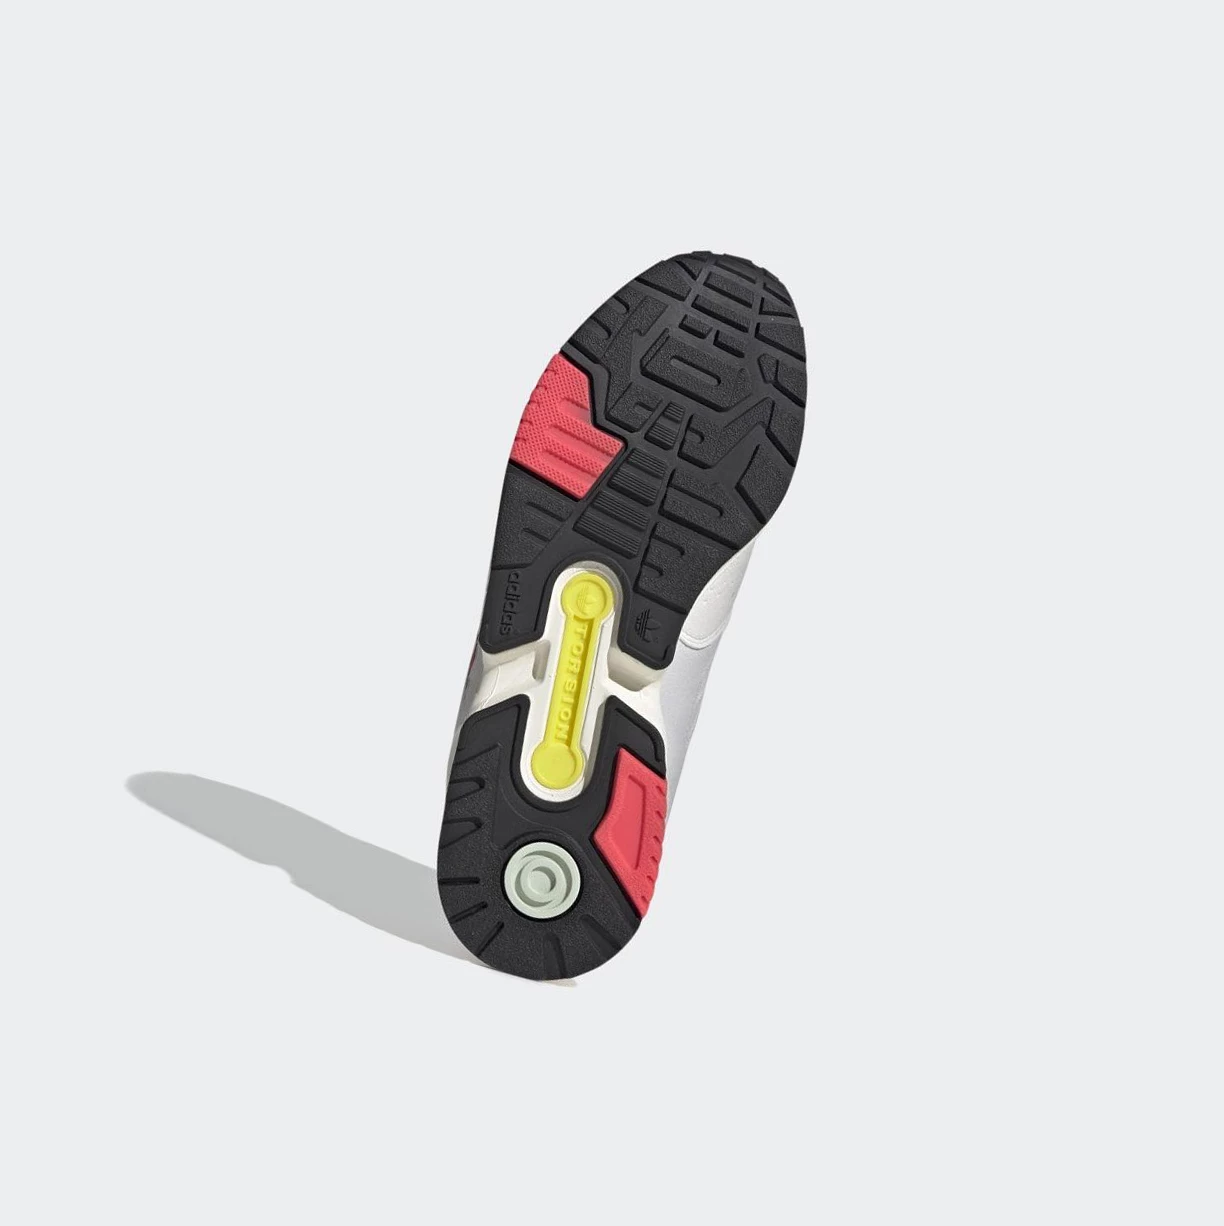 Originálne Topánky Adidas ZX 4000 Damske Biele | 637SKJLOKNY